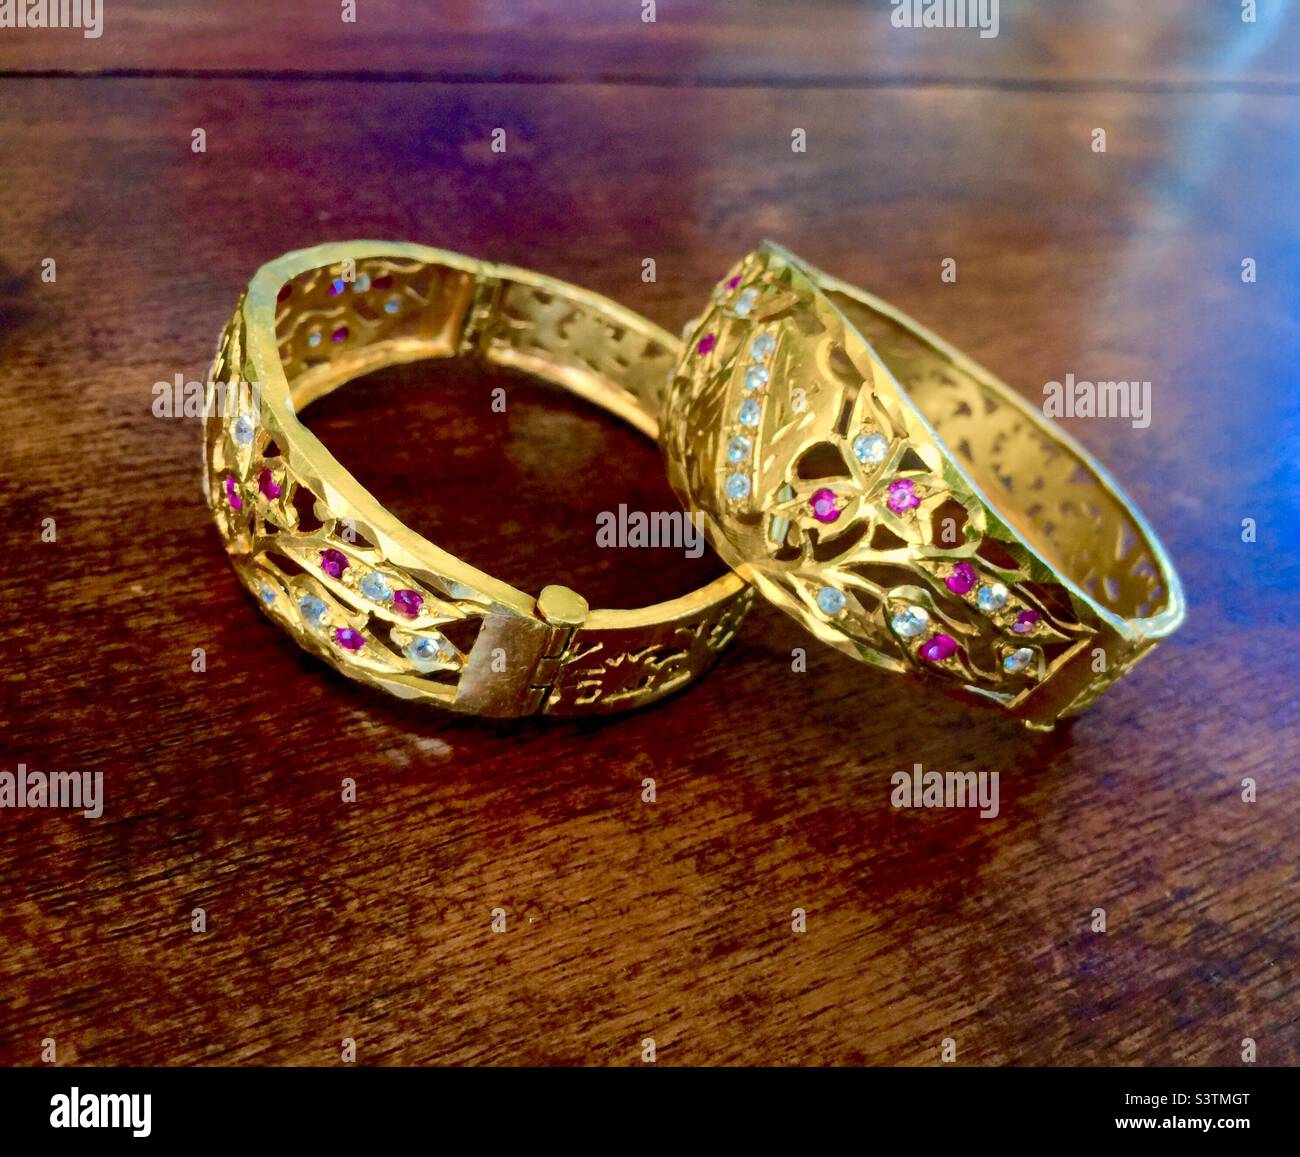 Ornate gold bracelets with precious stones Stock Photo